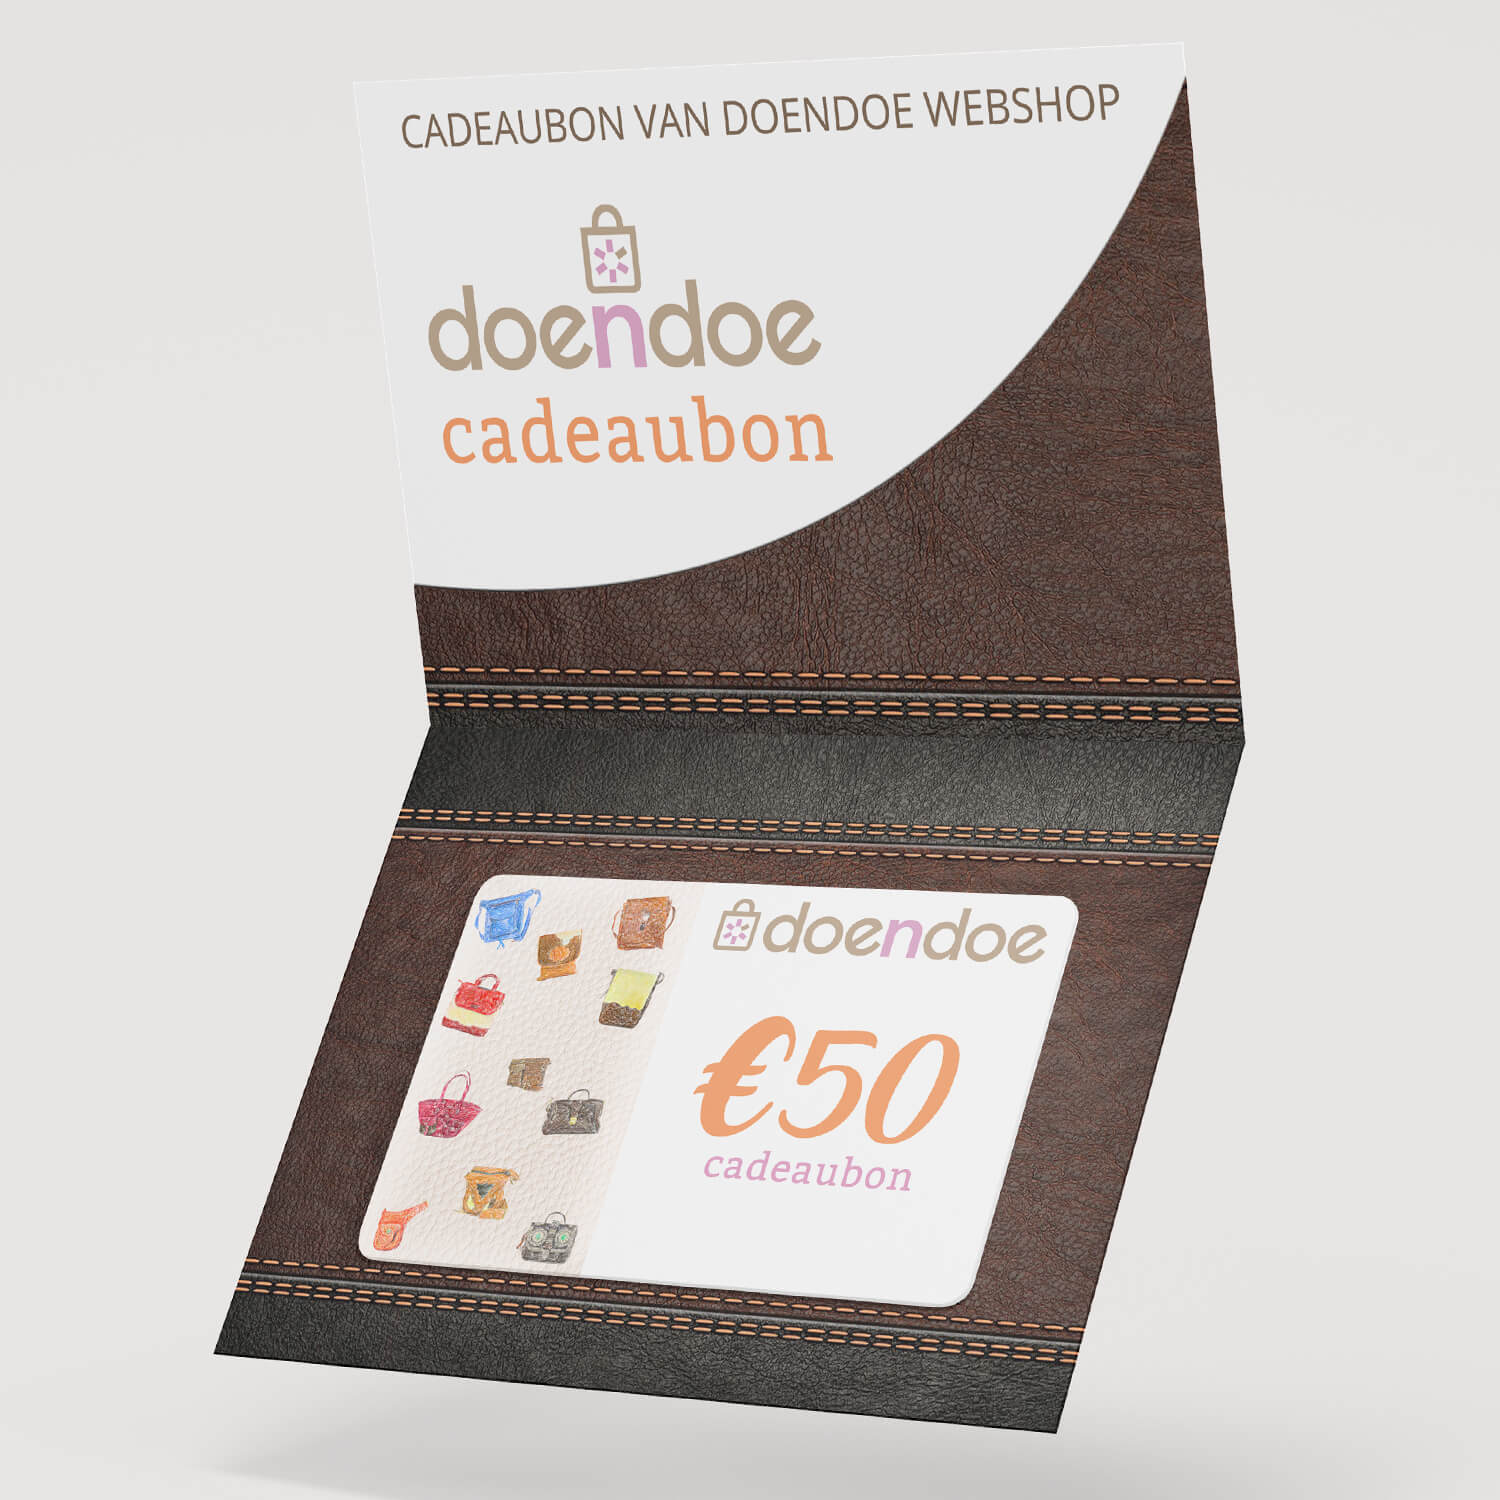 Doenya Doendoe Cadeaubon €50.00, boho, Ibiza stijl - Doendoe Webshop